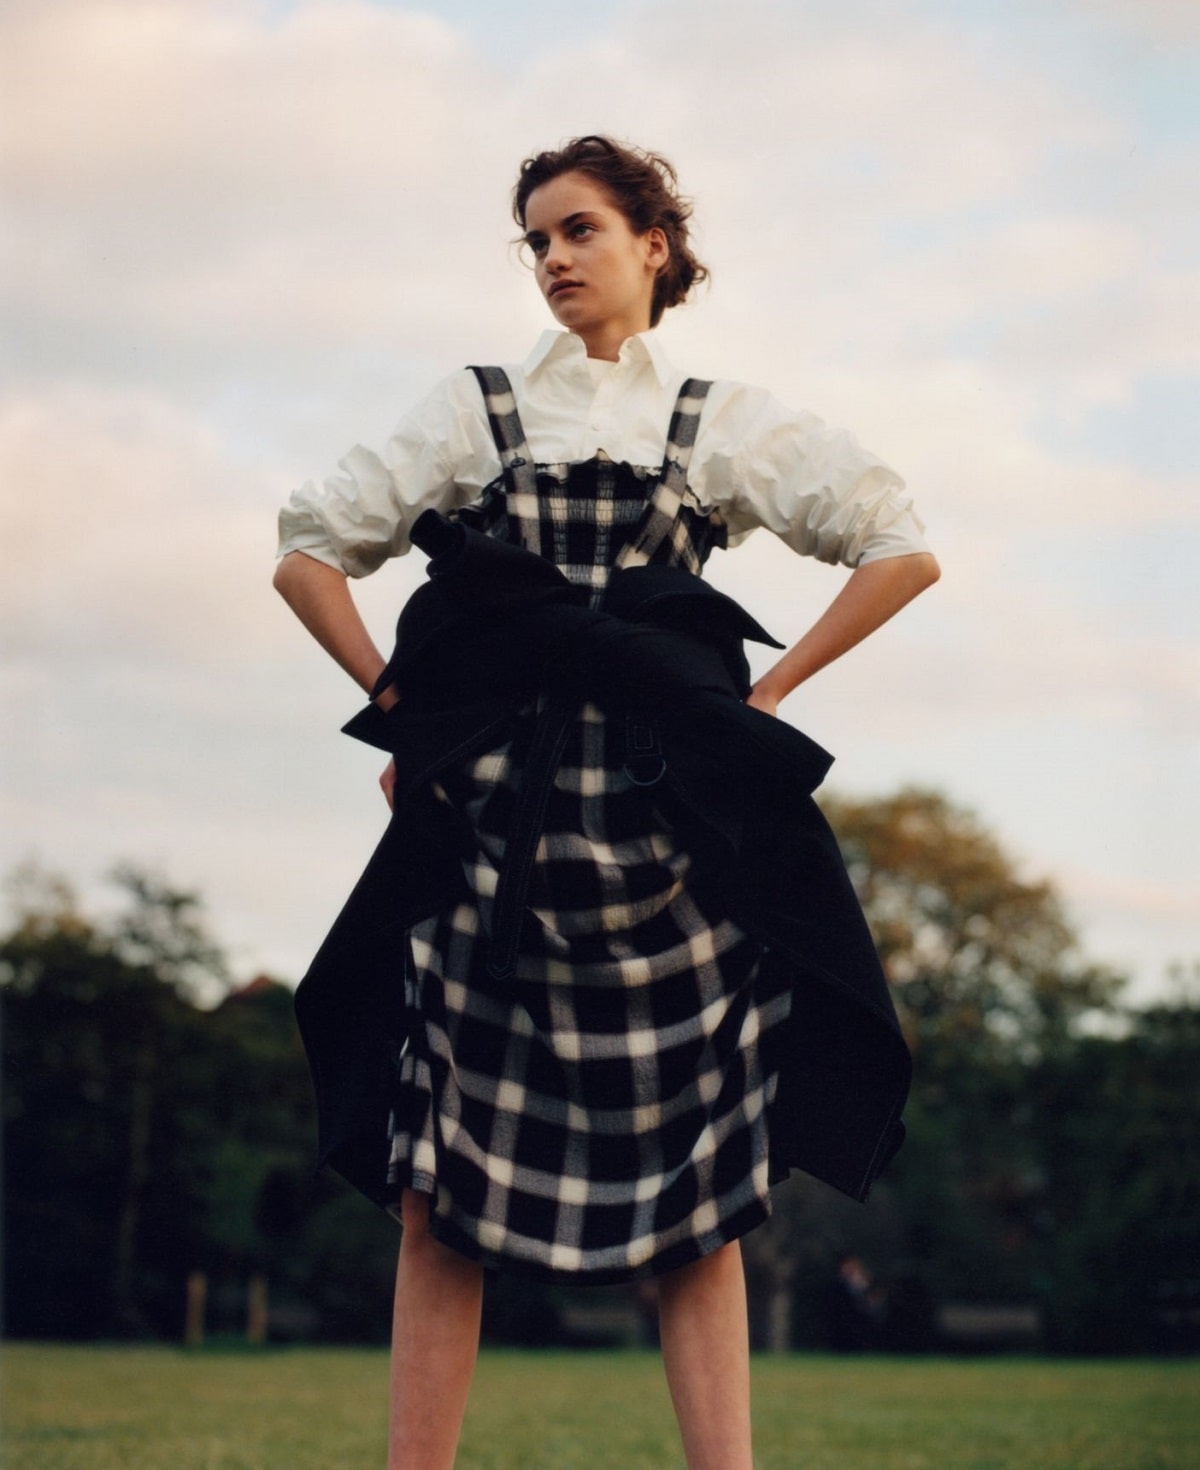 Alina Bolotina by Juliette Cassidy for Vogue Ukraine November 2018. Total look by Prada